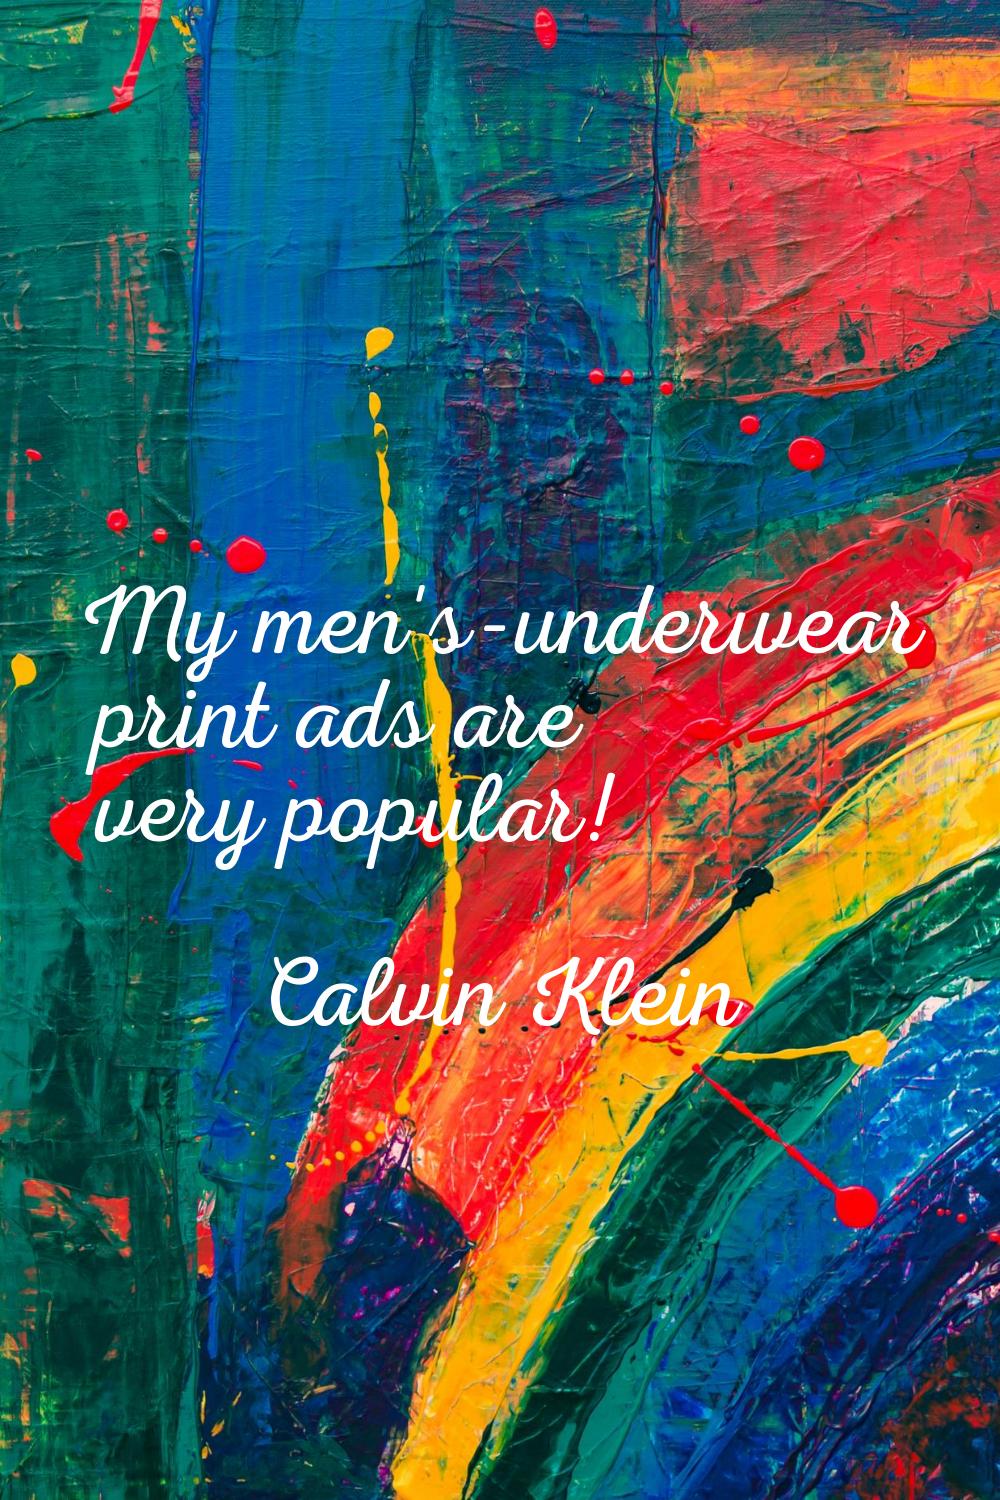 My men's-underwear print ads are very popular!